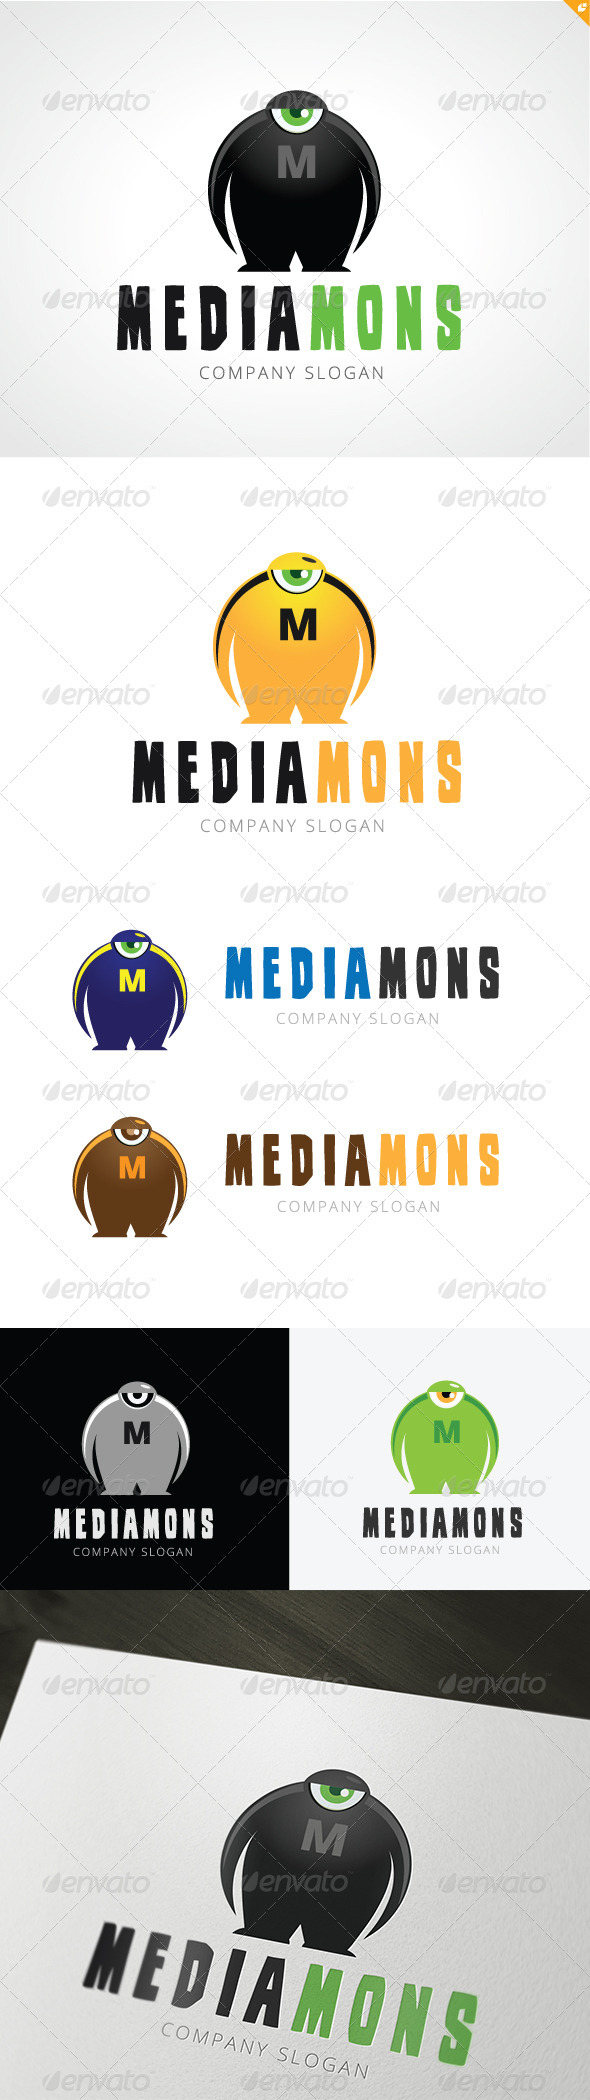 Mediamons Logo